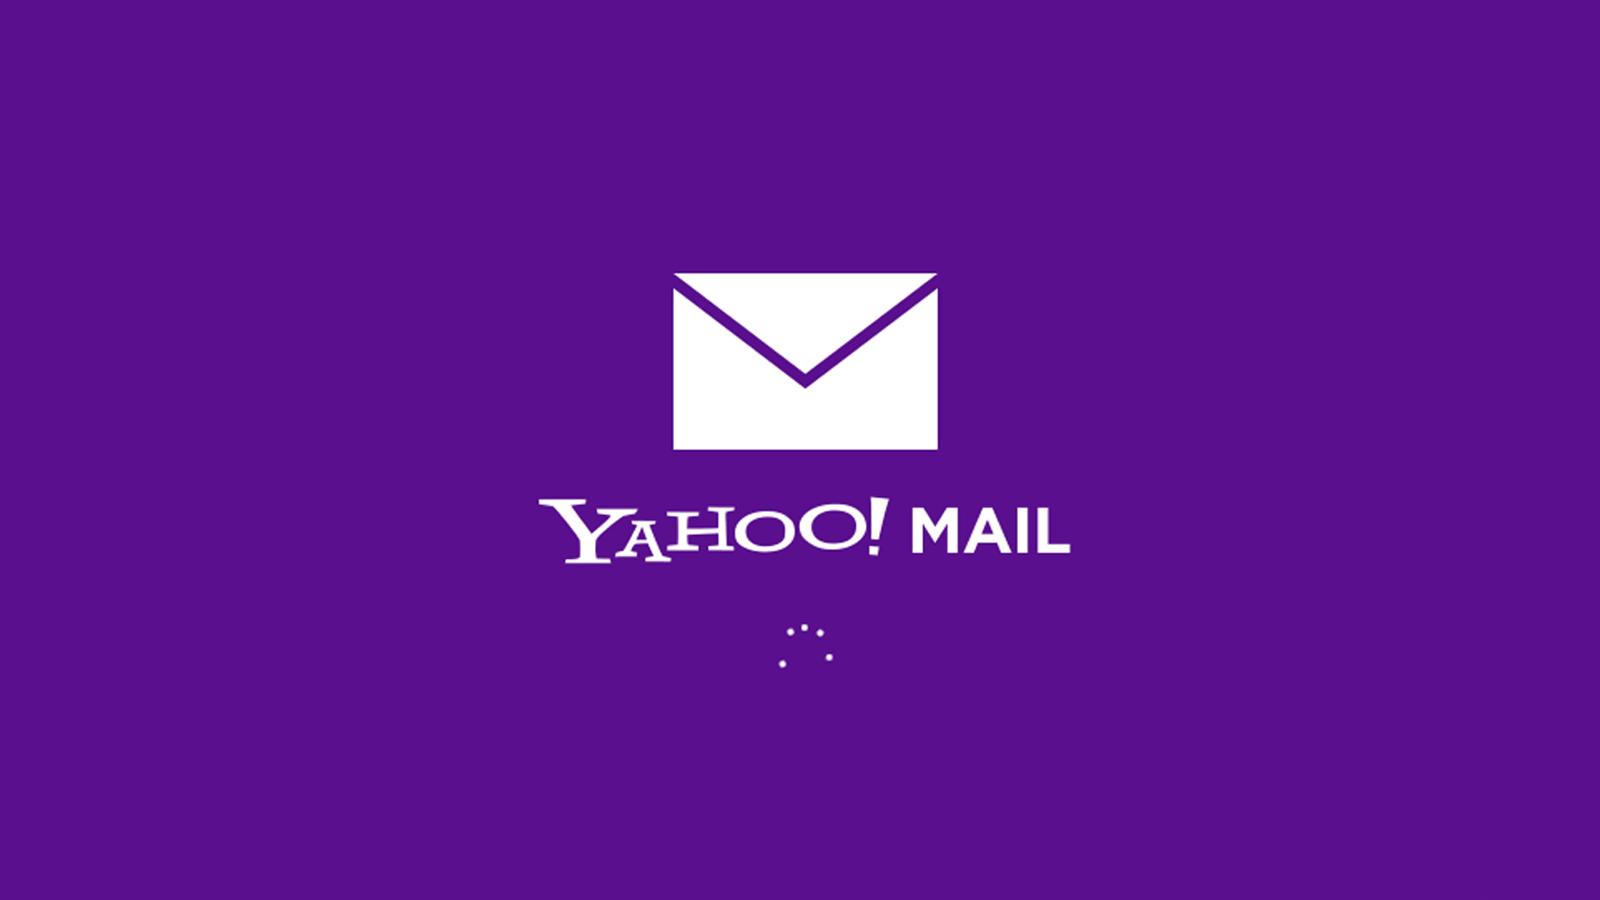 Yahoo Mail Logo Wallpaper 63930 1600x900px